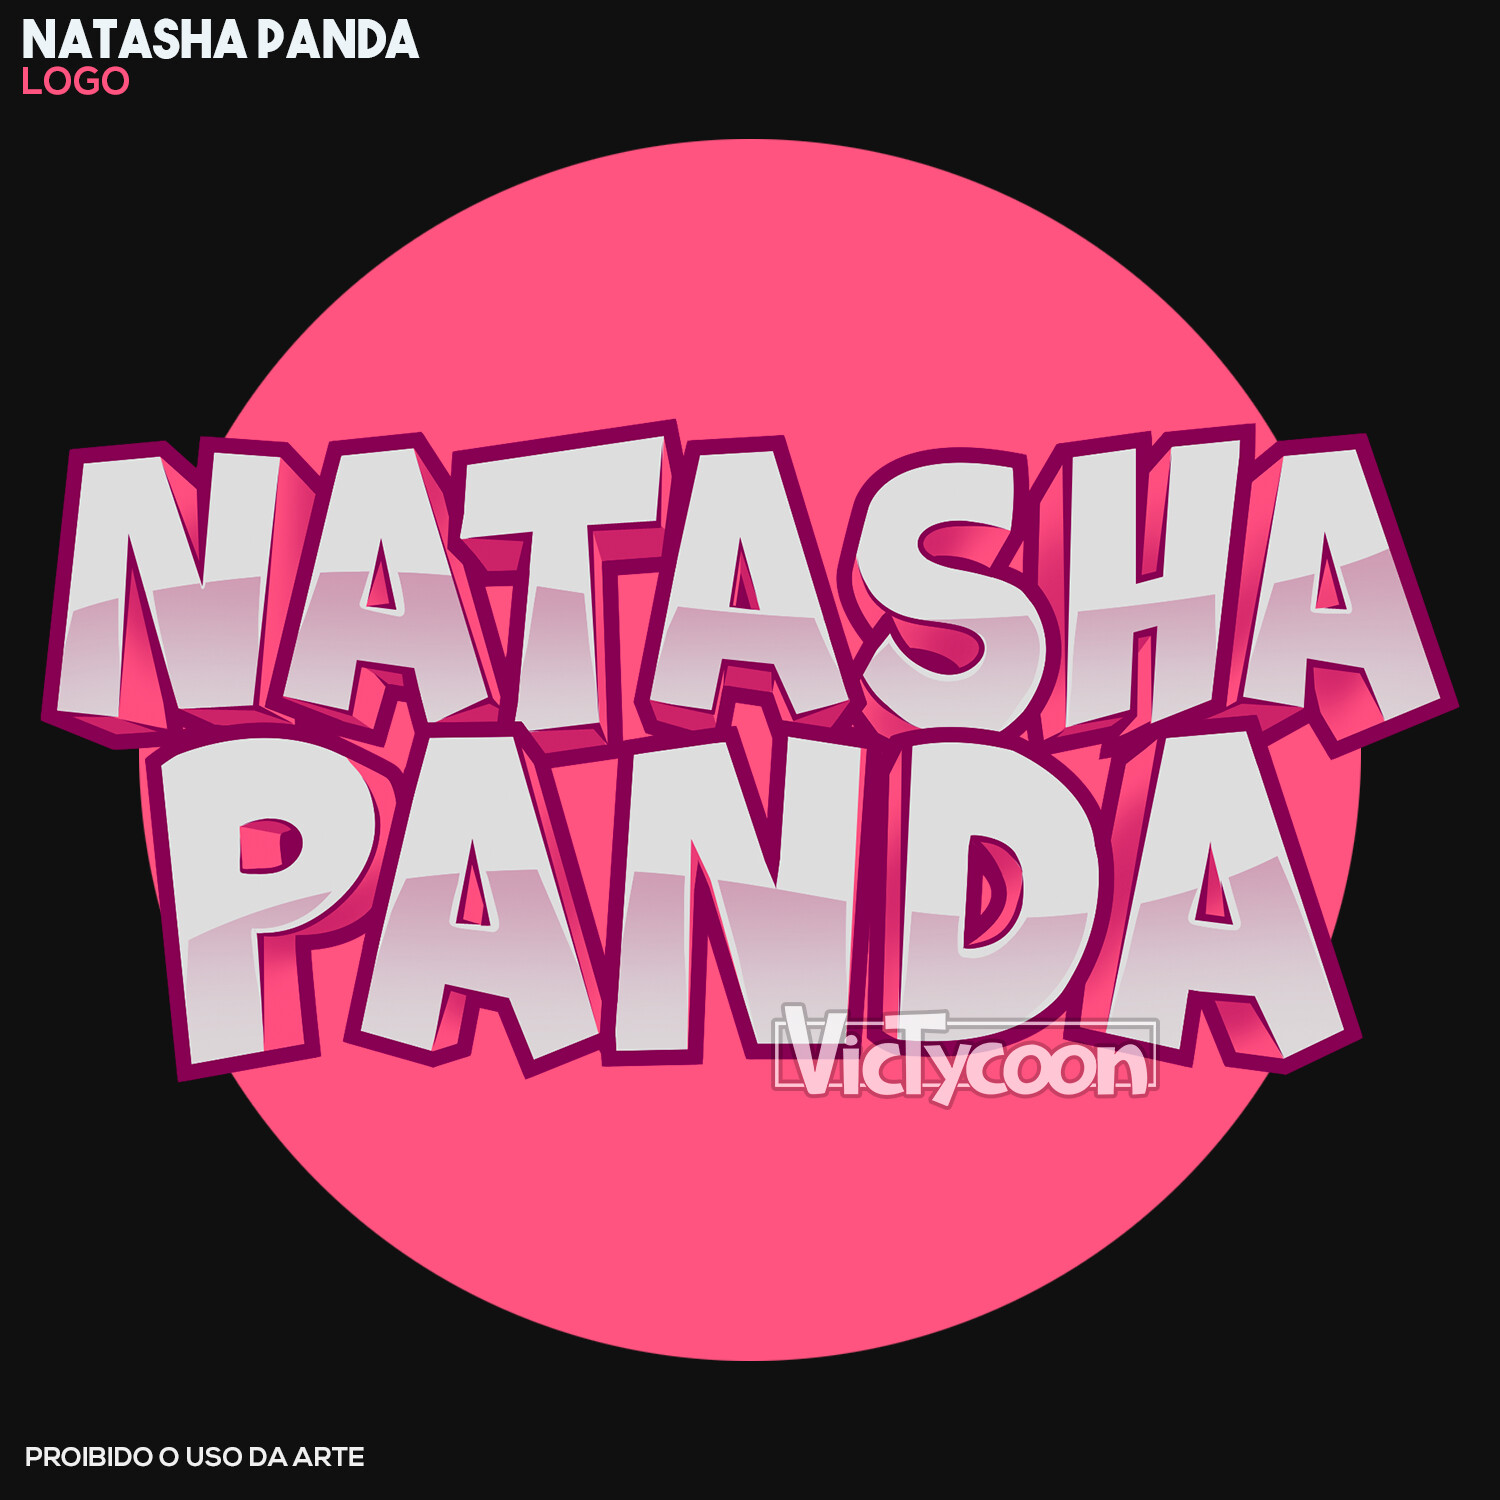 ArtStation - BANNER, AVATAR E LOGO - Natasha Panda ()